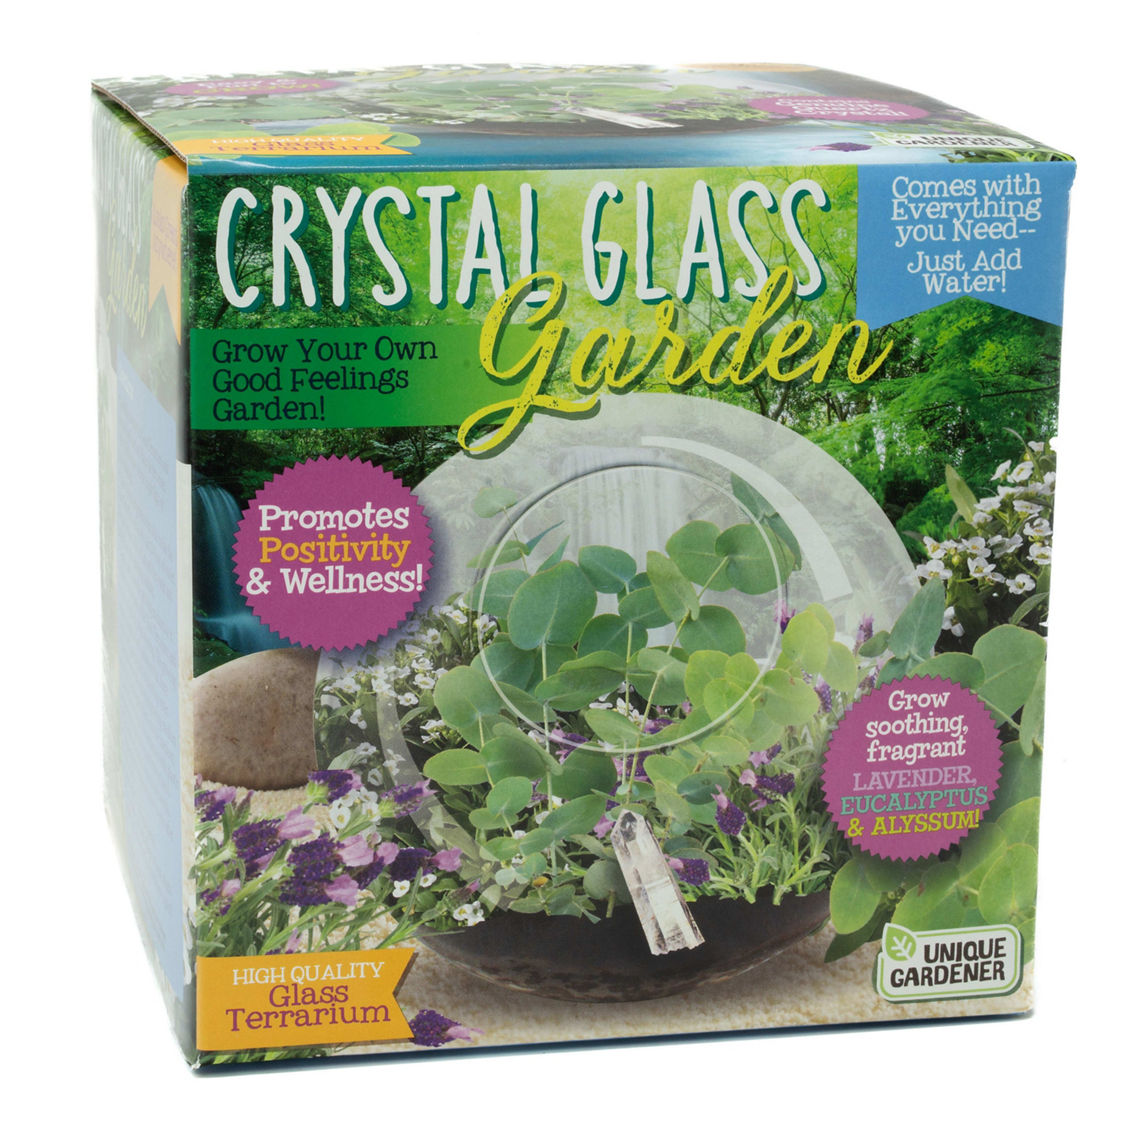 Unique Gardener Glass Terrarium - Crystal Glass Garden - Image 2 of 5